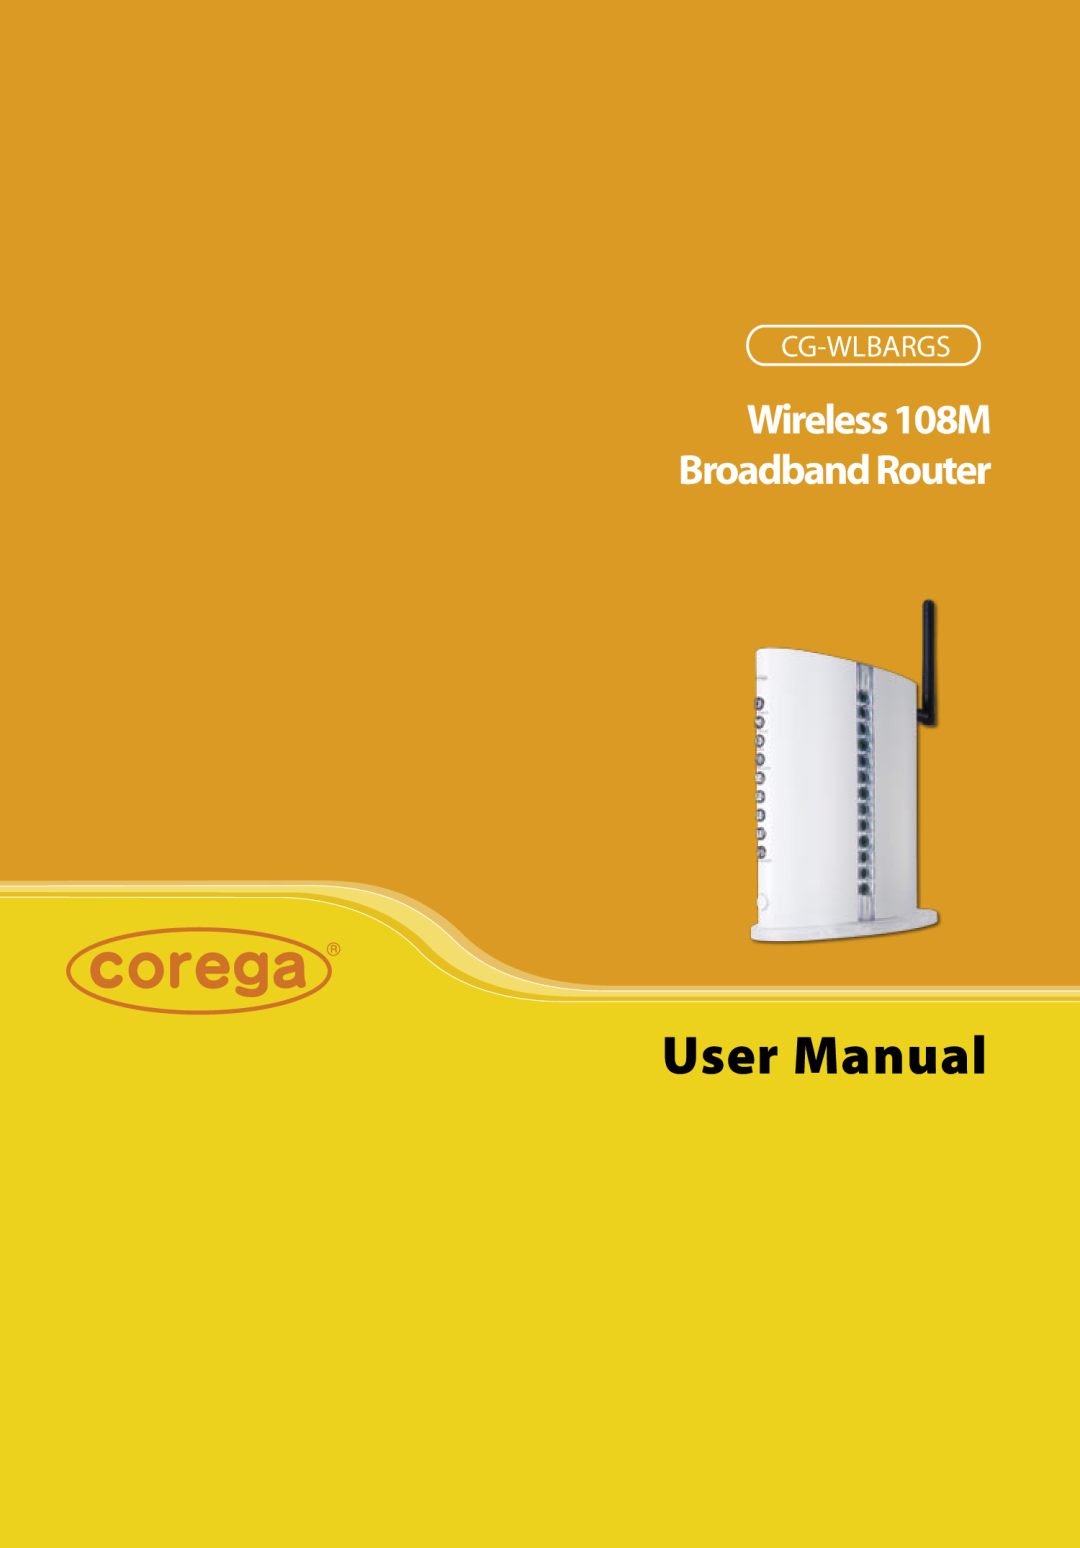 Allied Telesis CG-WLBARGS manual User Manual, Wireless108M BroadbandRouter, Cg-Wlbargs 